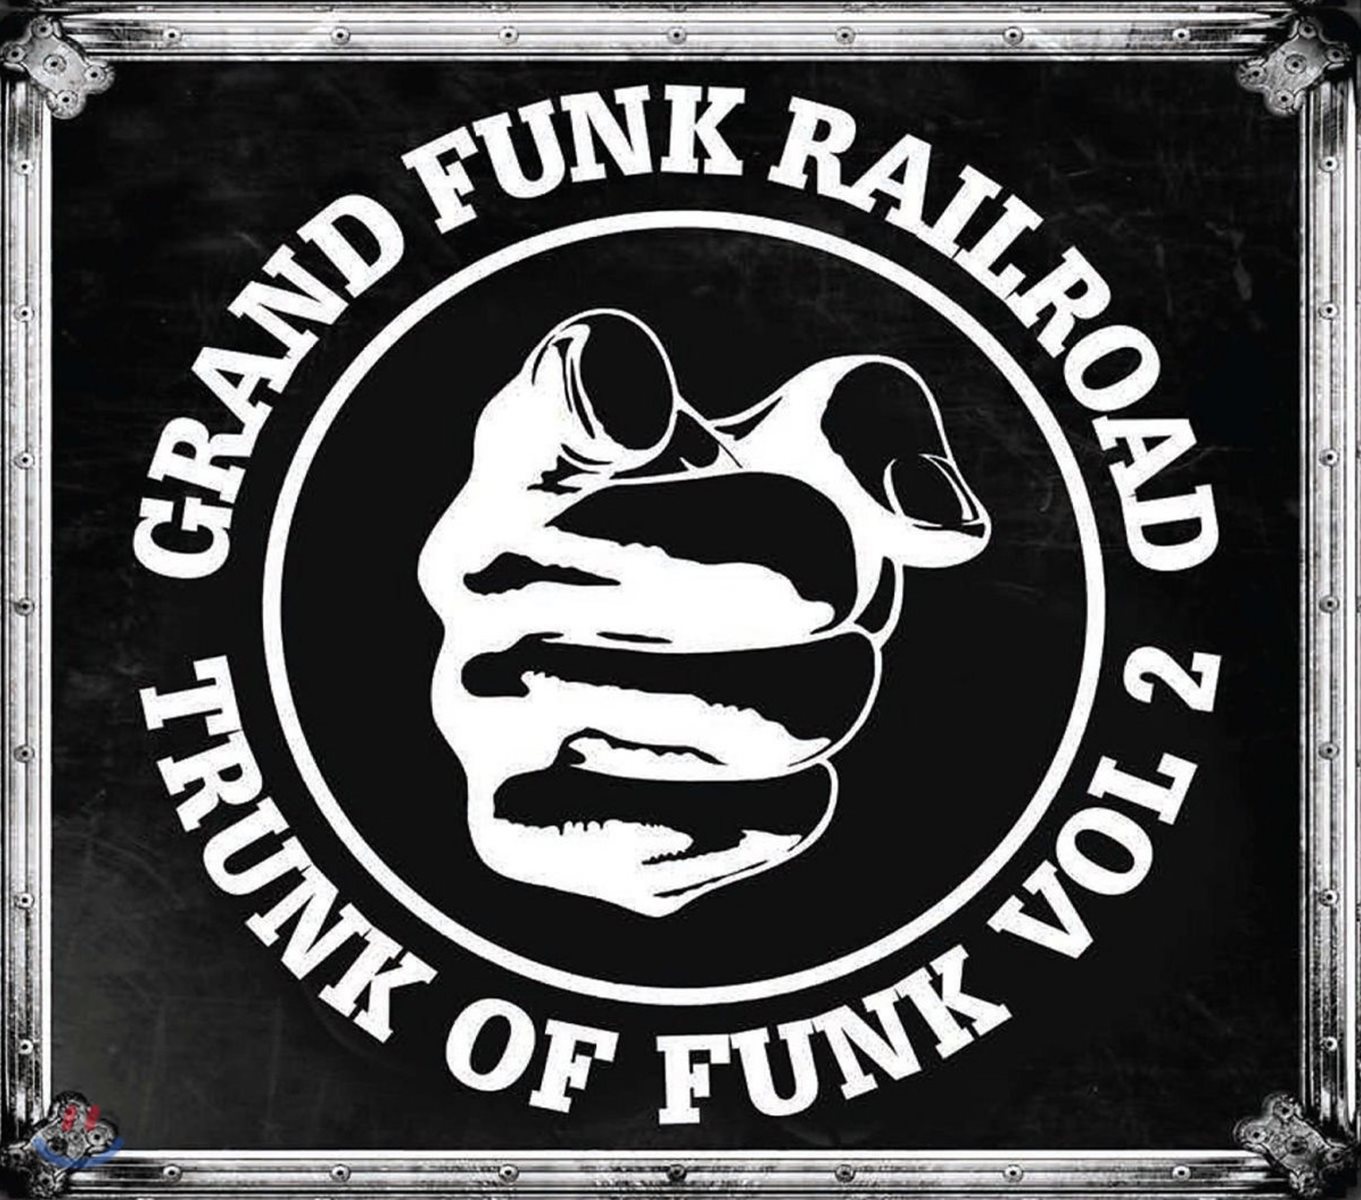 Grand Funk Railroad (그랜드 펑크 레일로드) - Trunk Of Funk, Vol.2